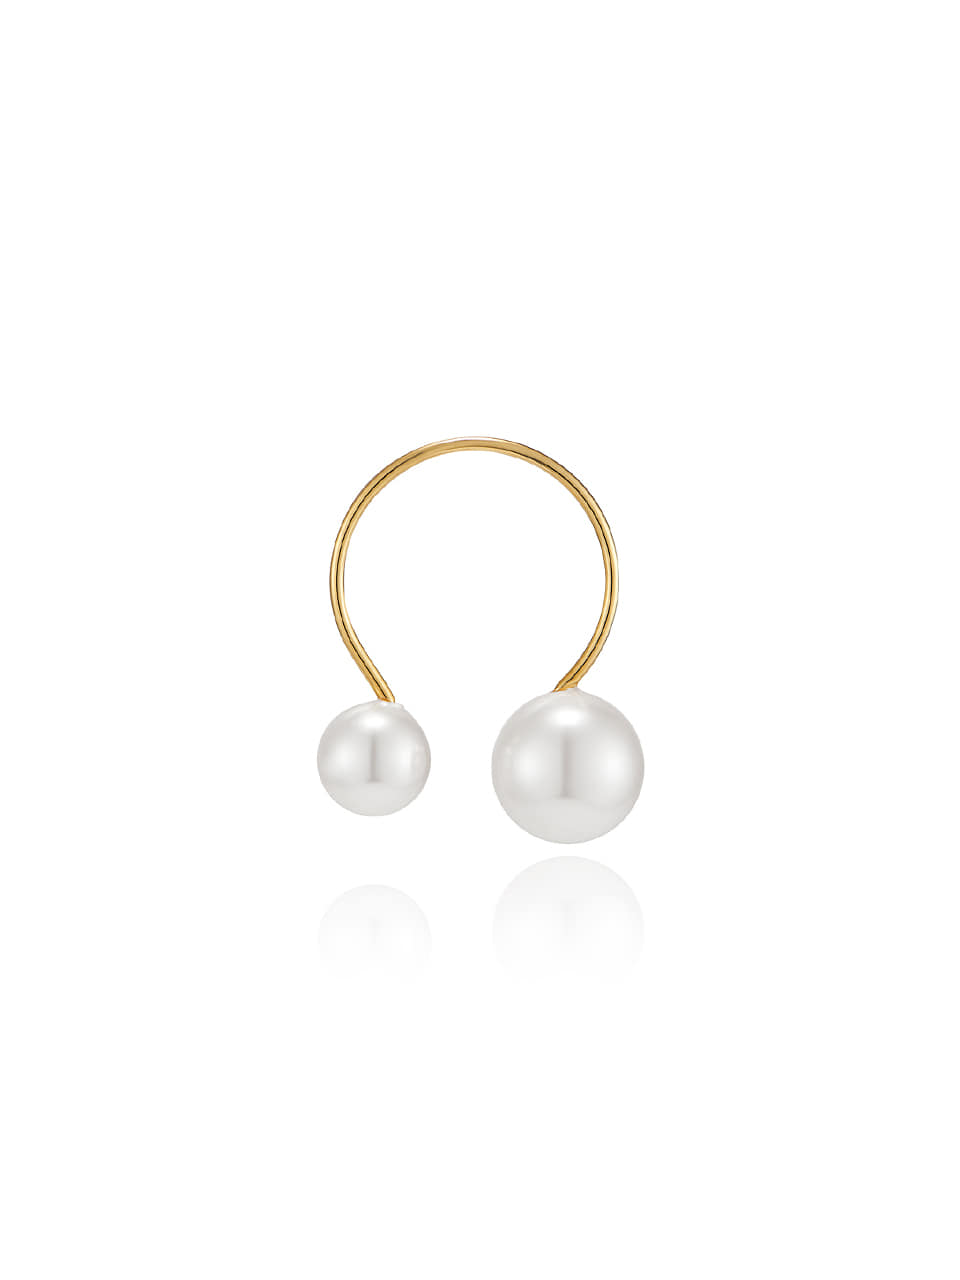 [silver925]Mild pearl earcuff